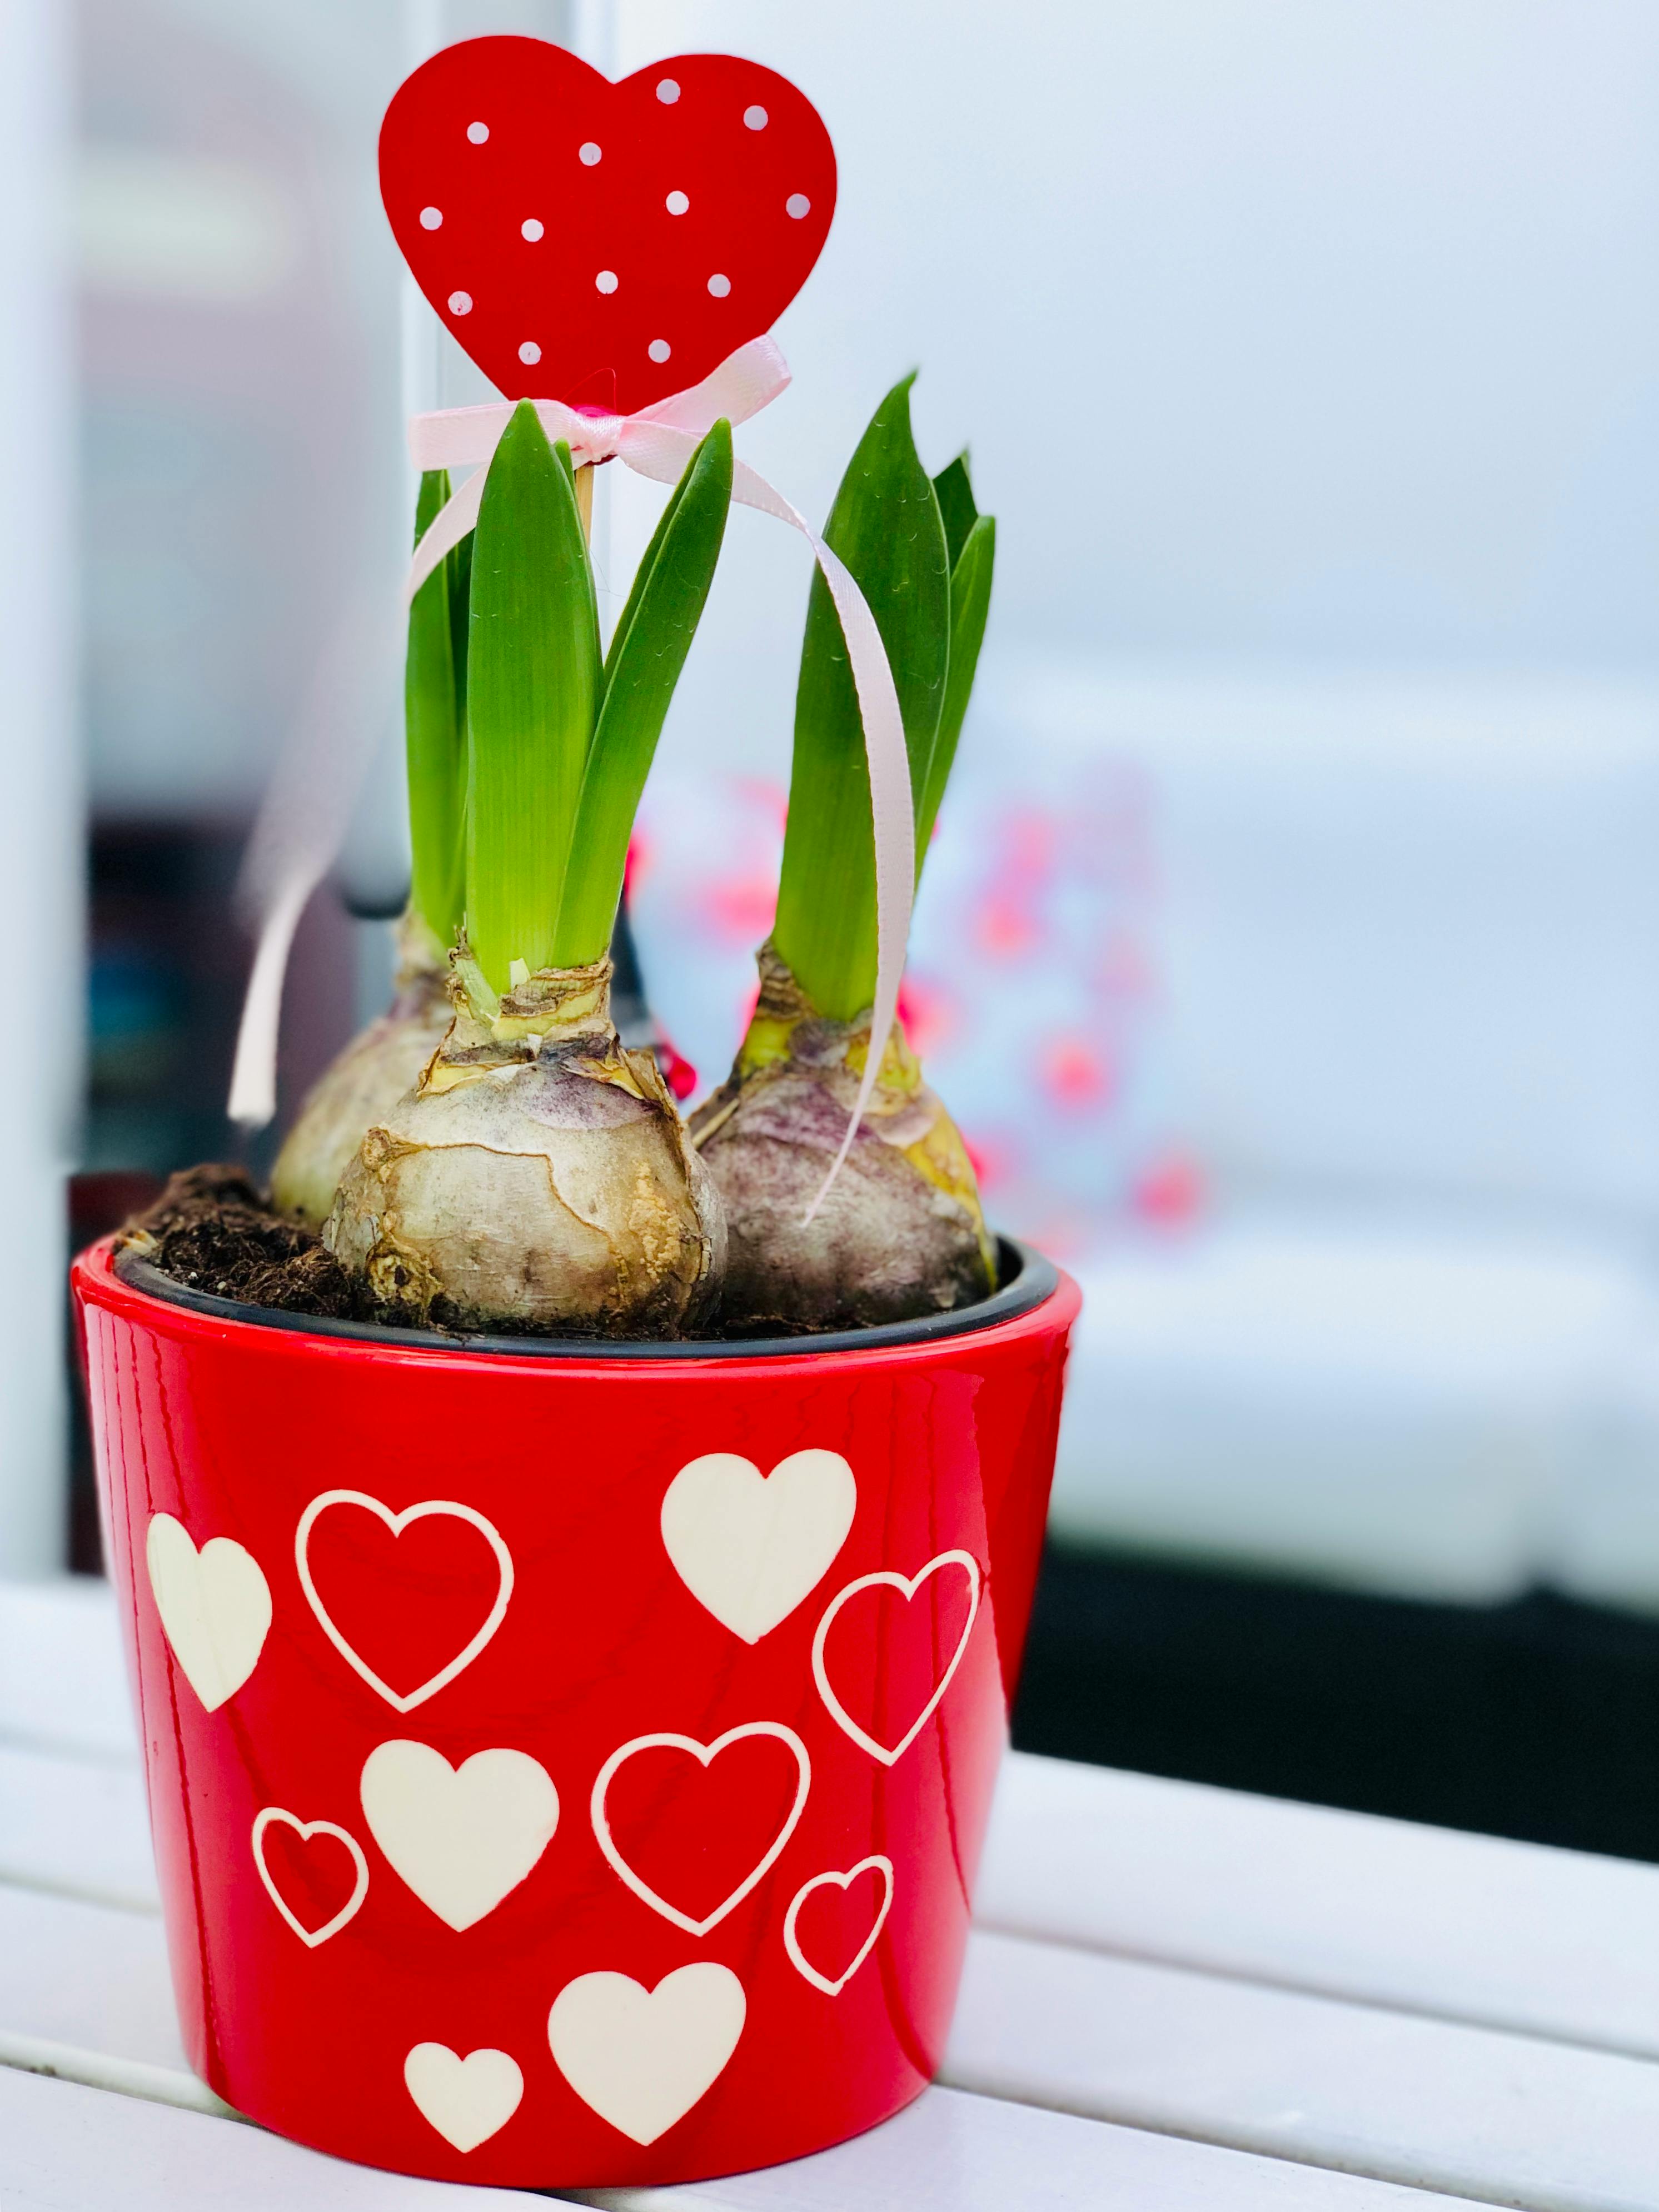 Free stock photo of heart, love story, plants